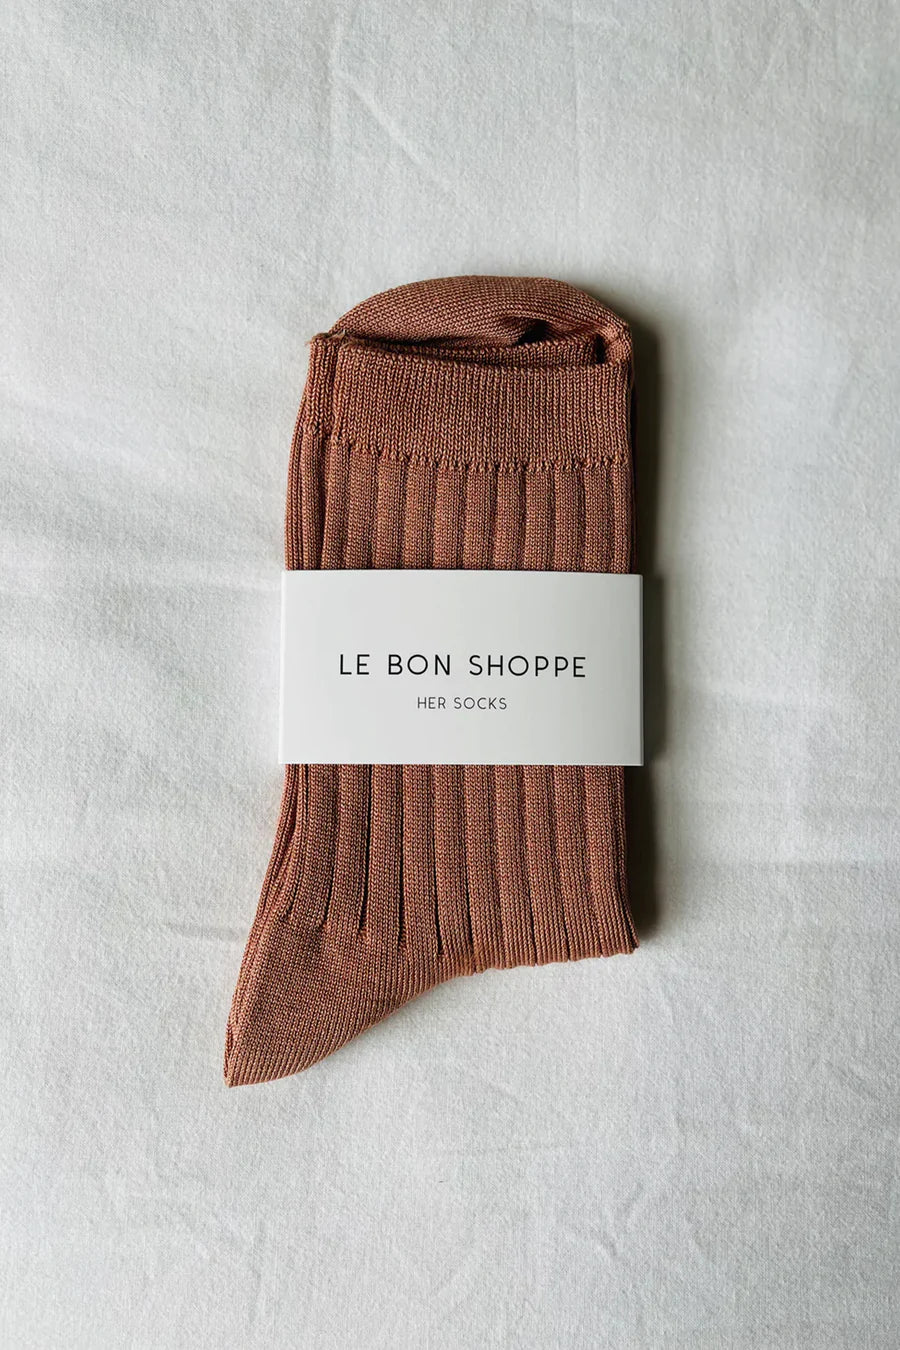 Le Bon Shoppe 'Her Sock' - Nude Peach